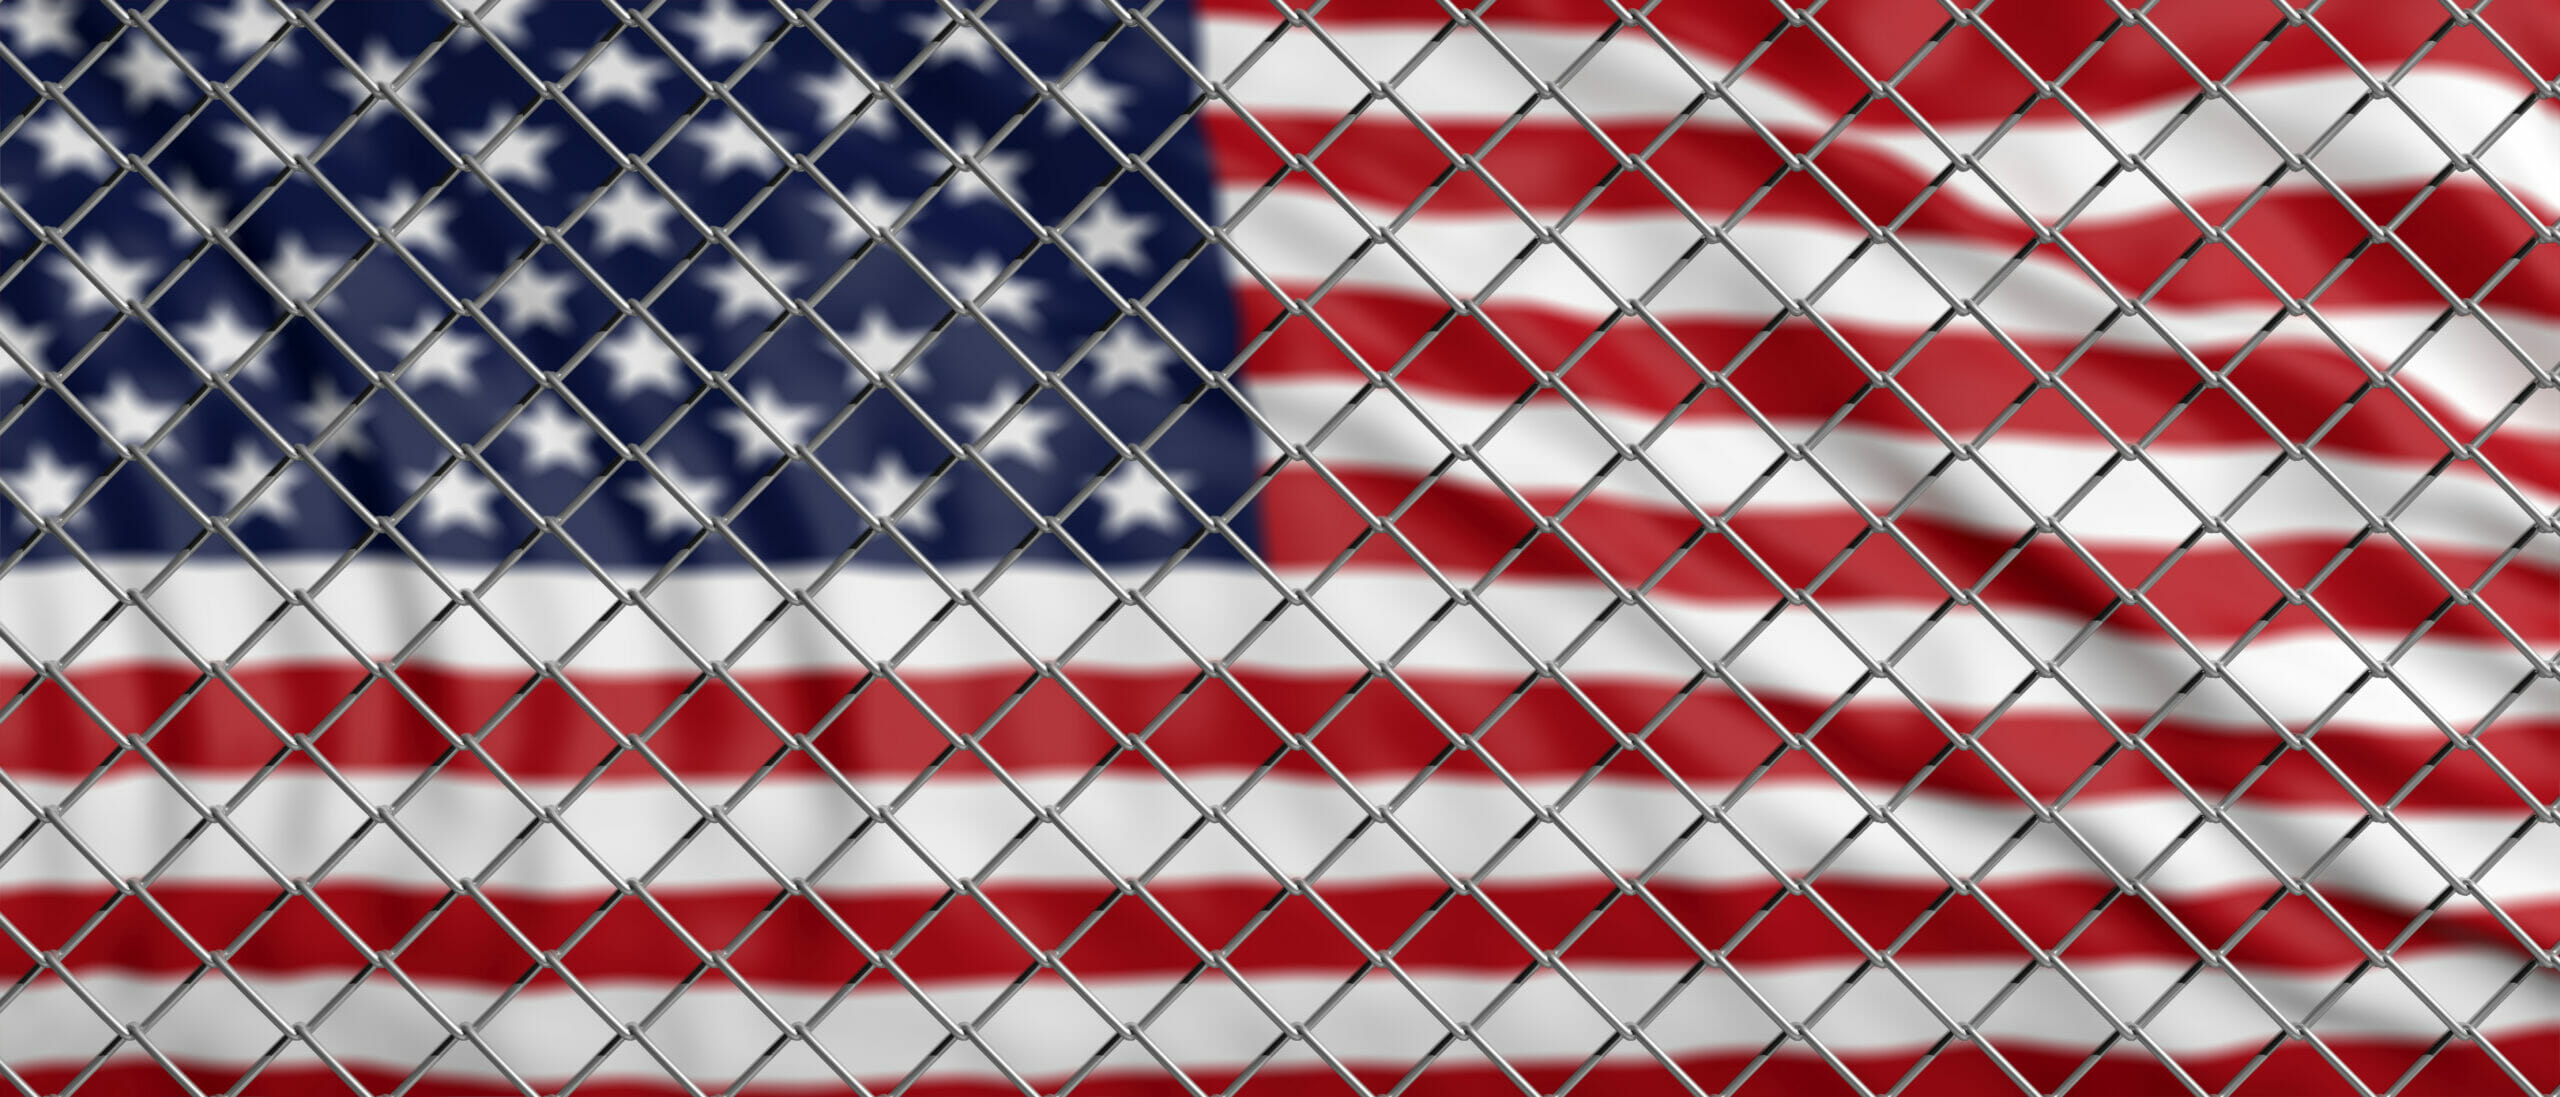 US flag behind fence